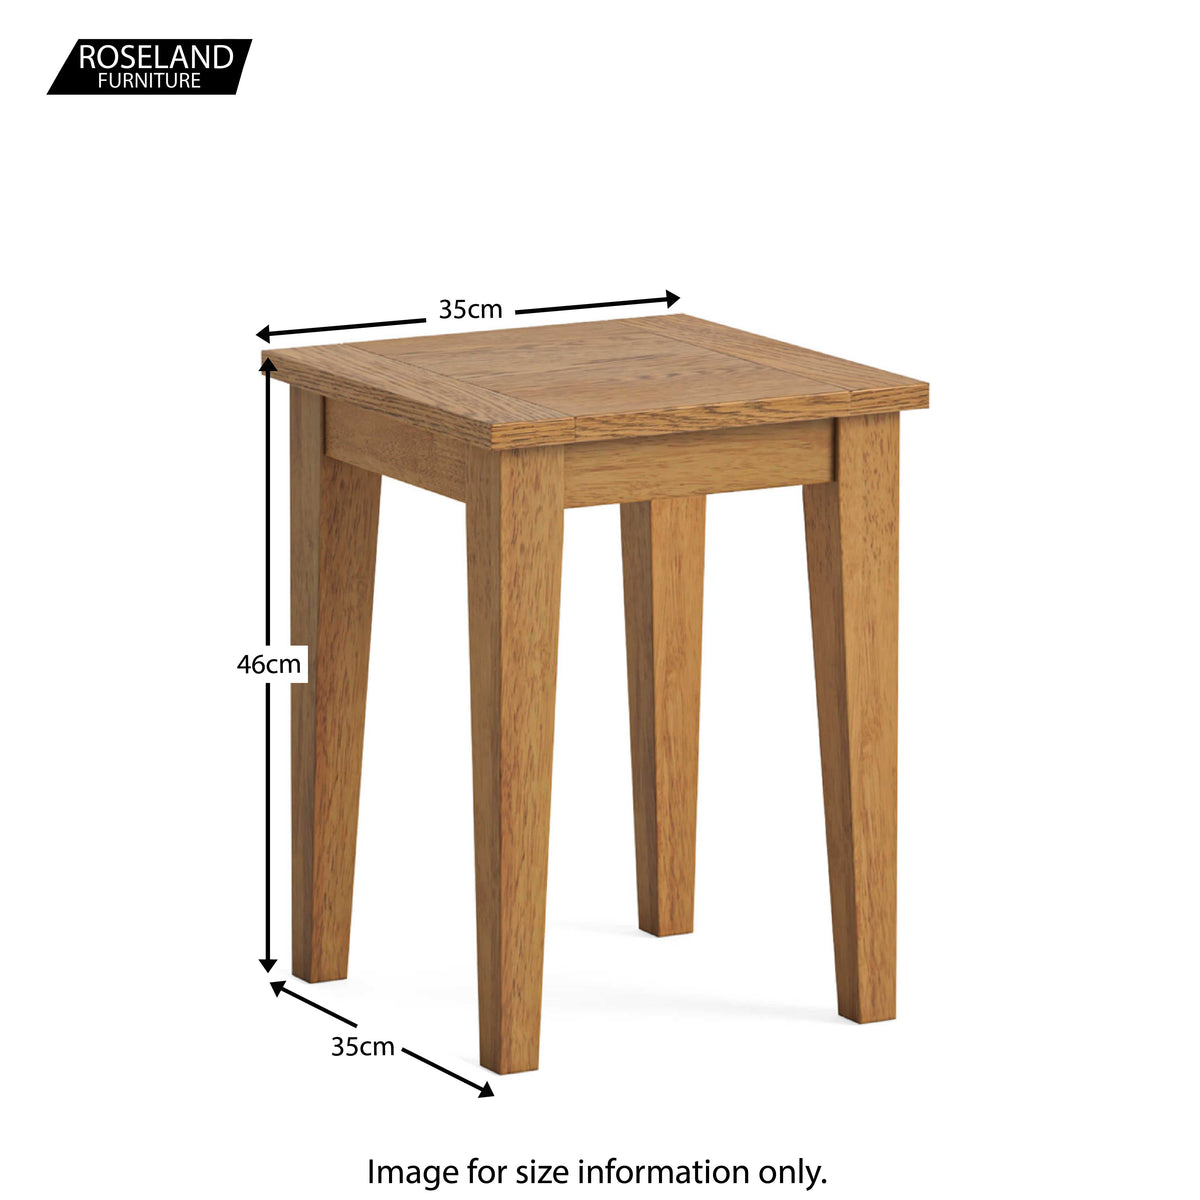 Fran Oak Sofa End Side Table Dimensions guide